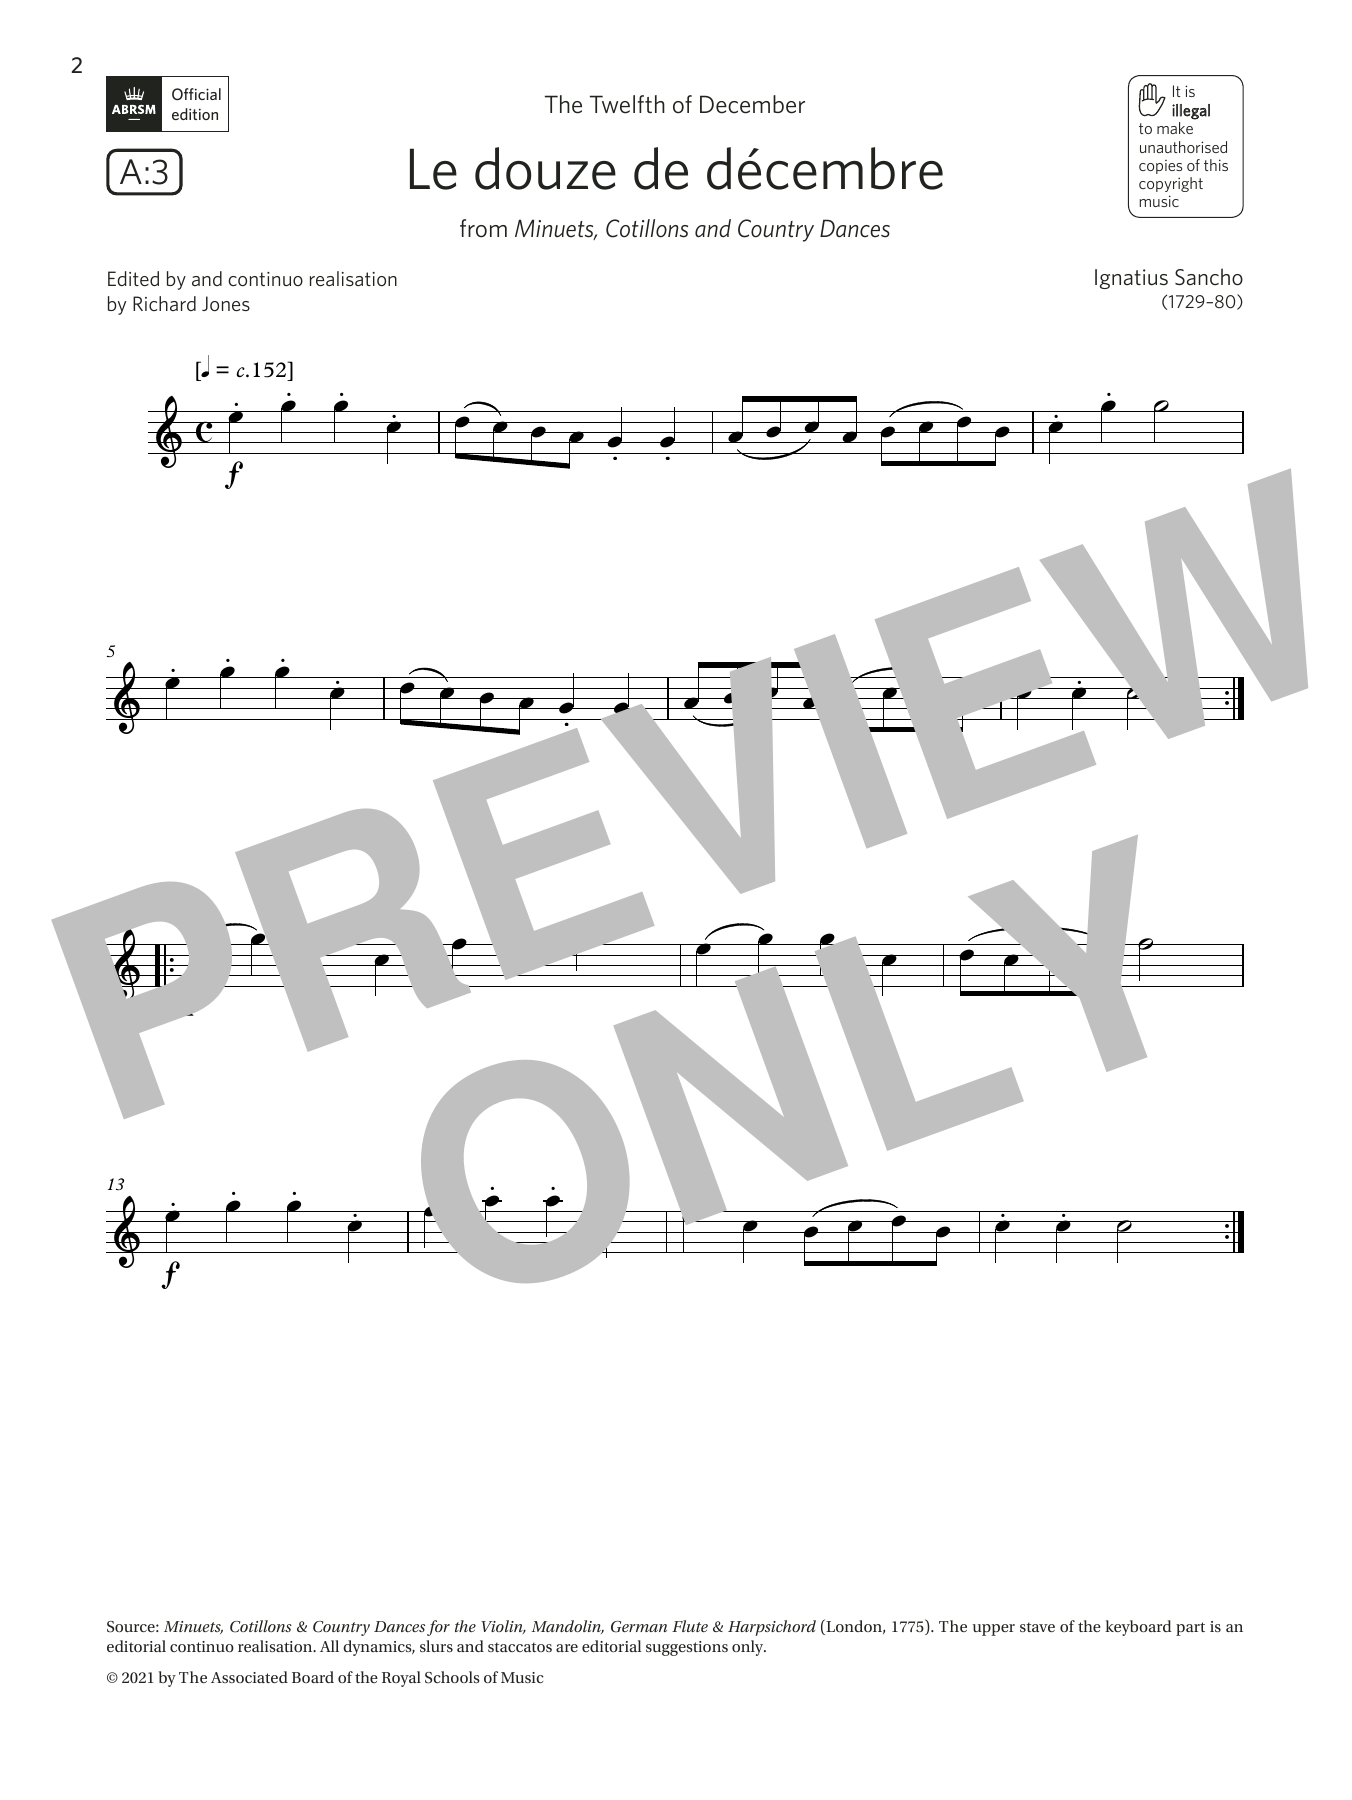 Ignatius Sancho Le douze de décembre (Grade 1 List A3 from the ABRSM Flute syllabus from 2022) Sheet Music Notes & Chords for Flute Solo - Download or Print PDF